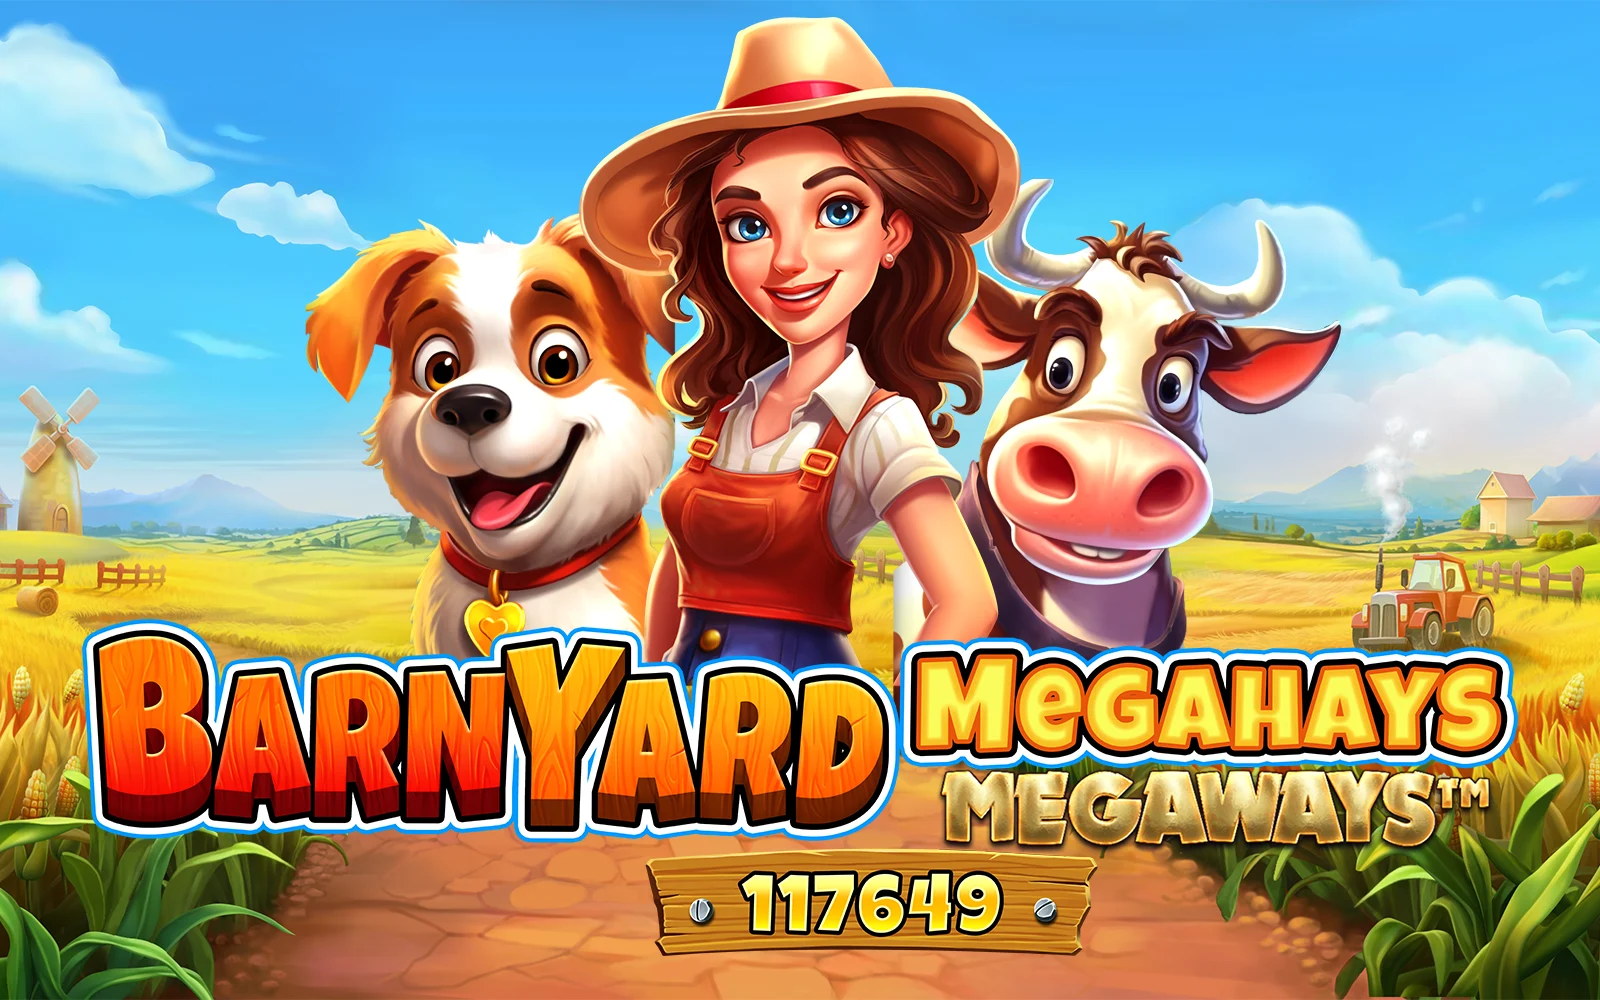 Играйте Barnyard Megahays Megaways™ на Starcasino.be онлайн казино